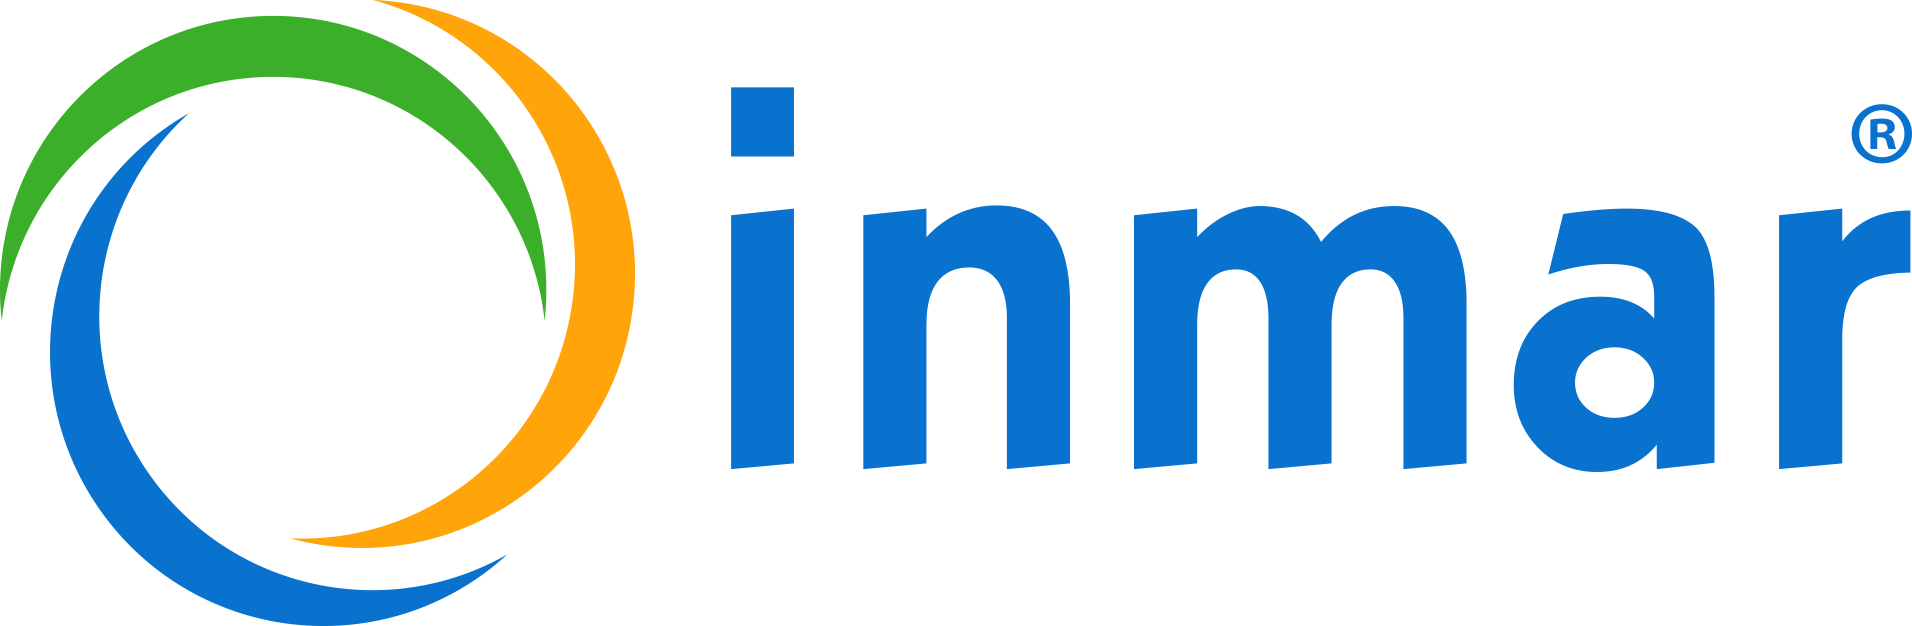 Inmar Announces Tech